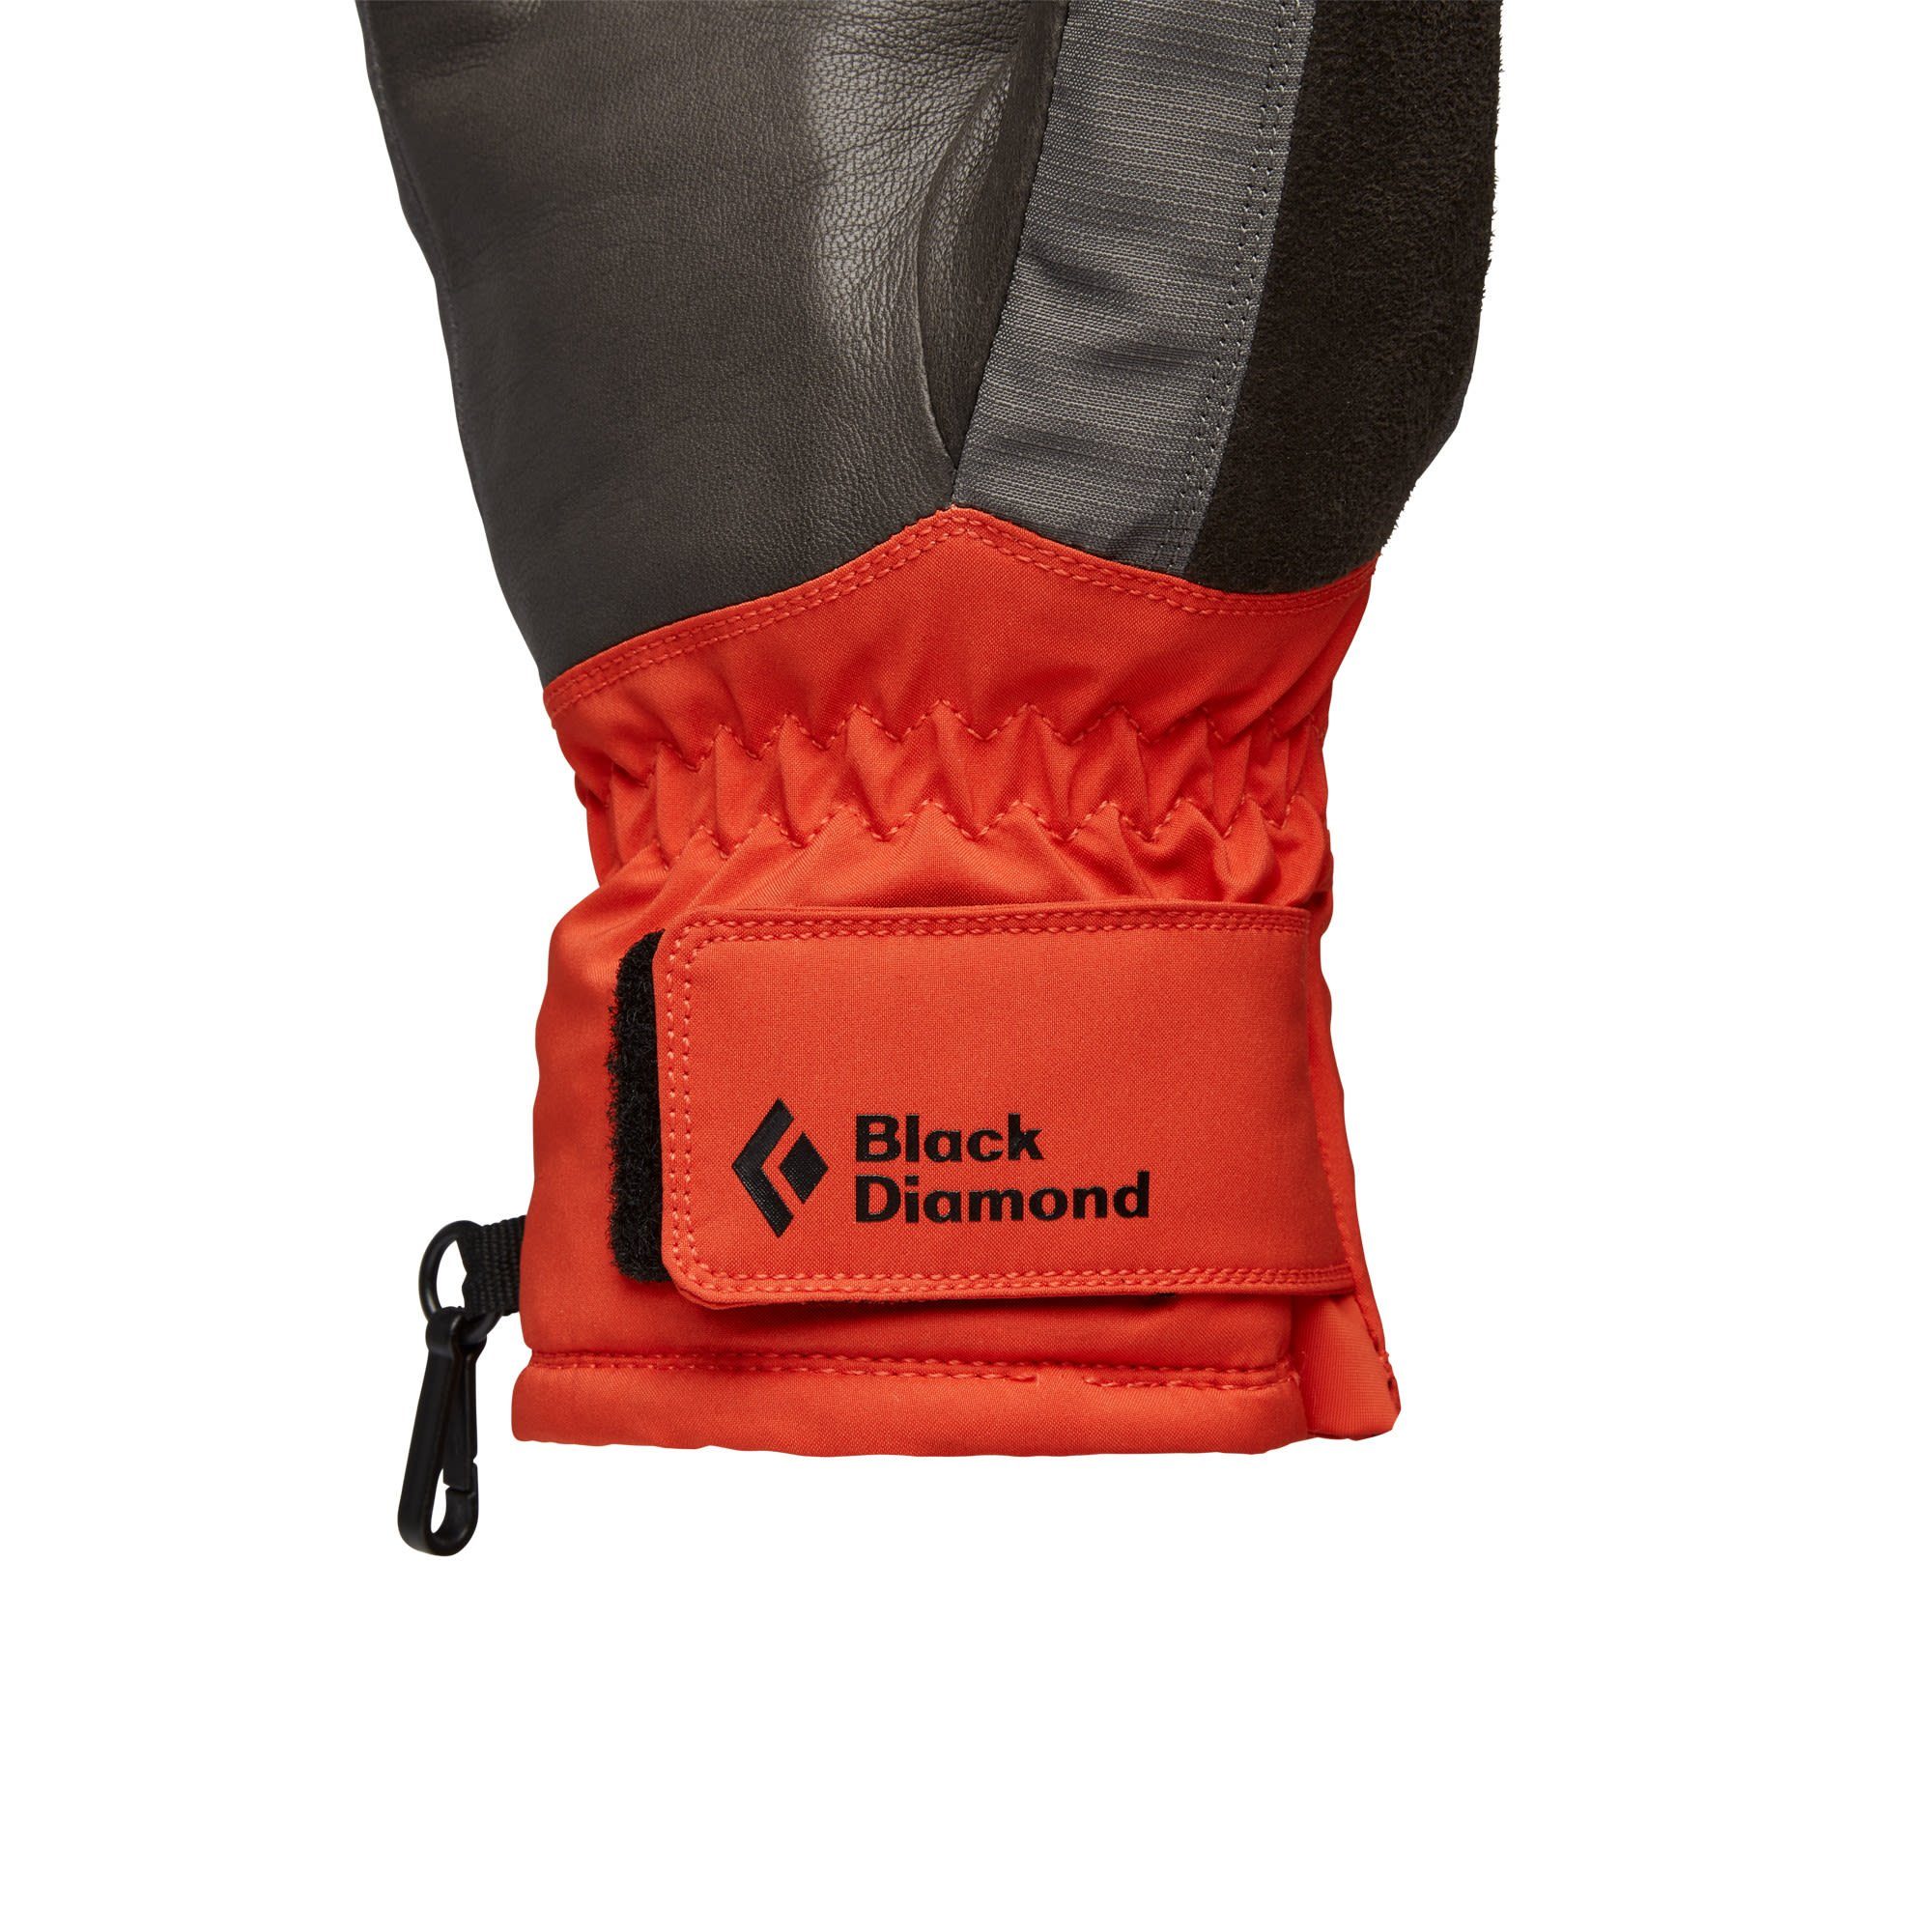 Mx Fleecehandschuhe Mission Diamond Octane Black - Diamond Black Walnuts Accessoires Glove